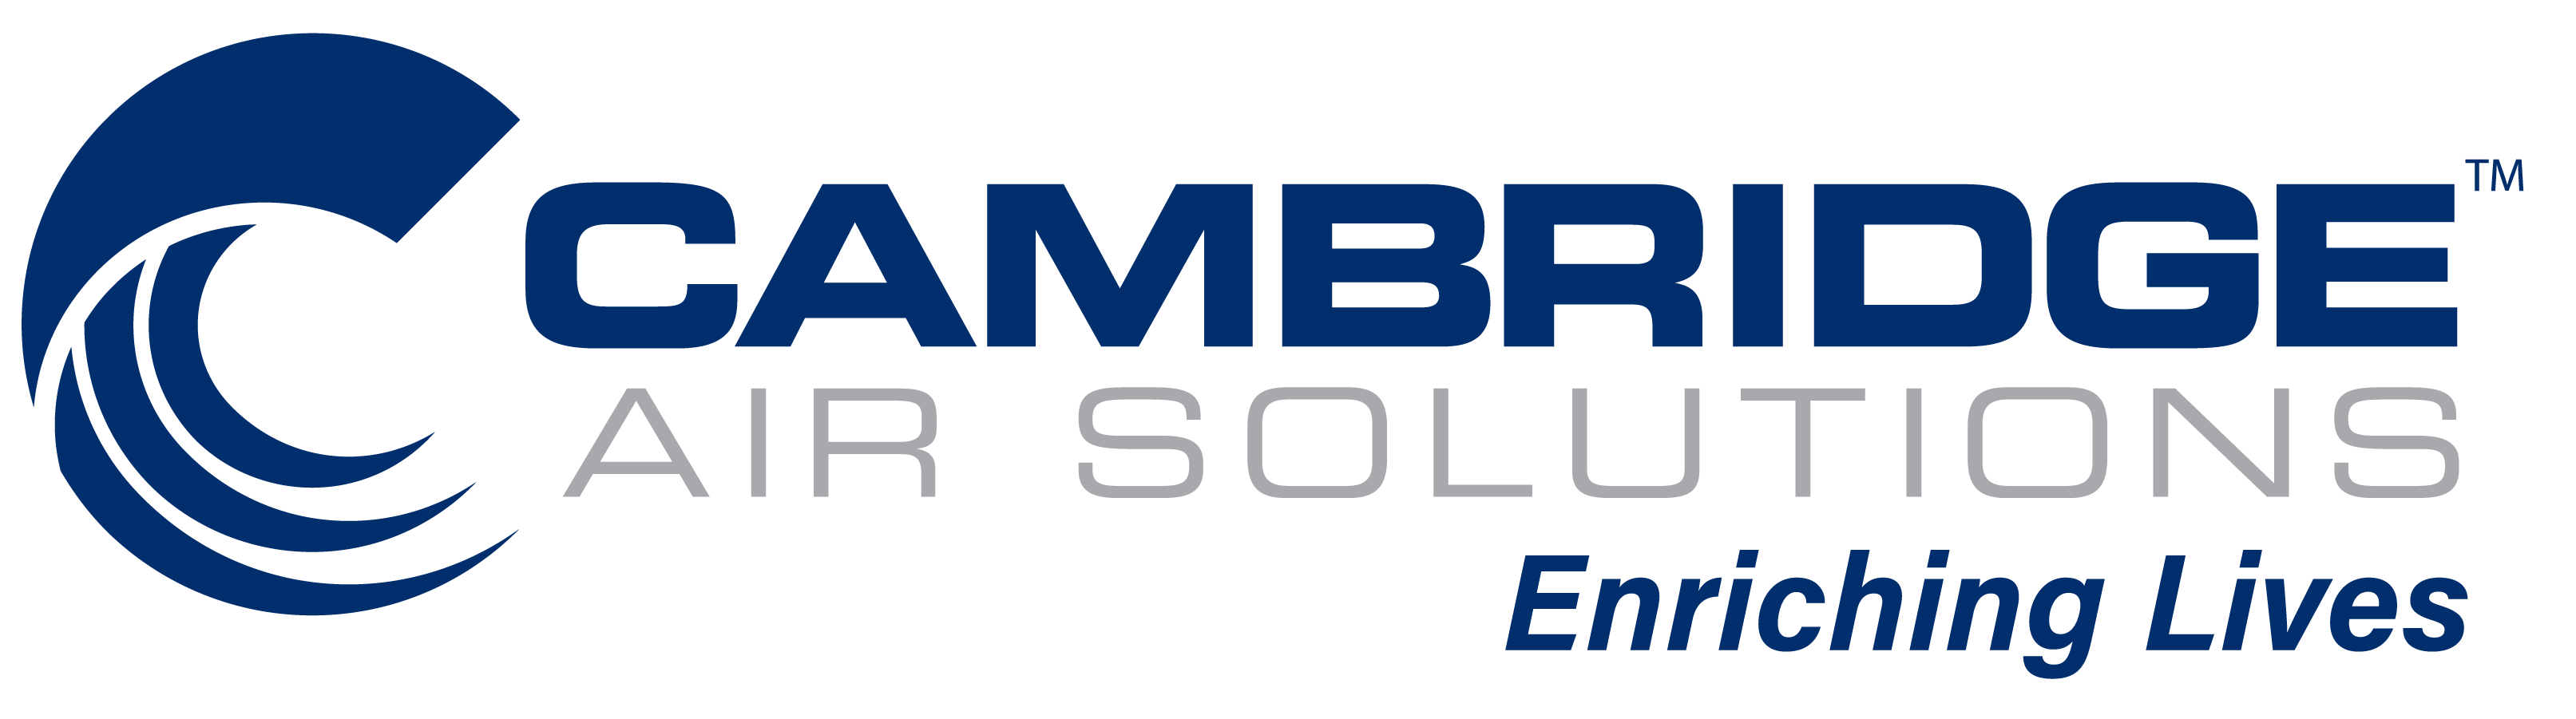 Cambridge Air Solutions Company Logo